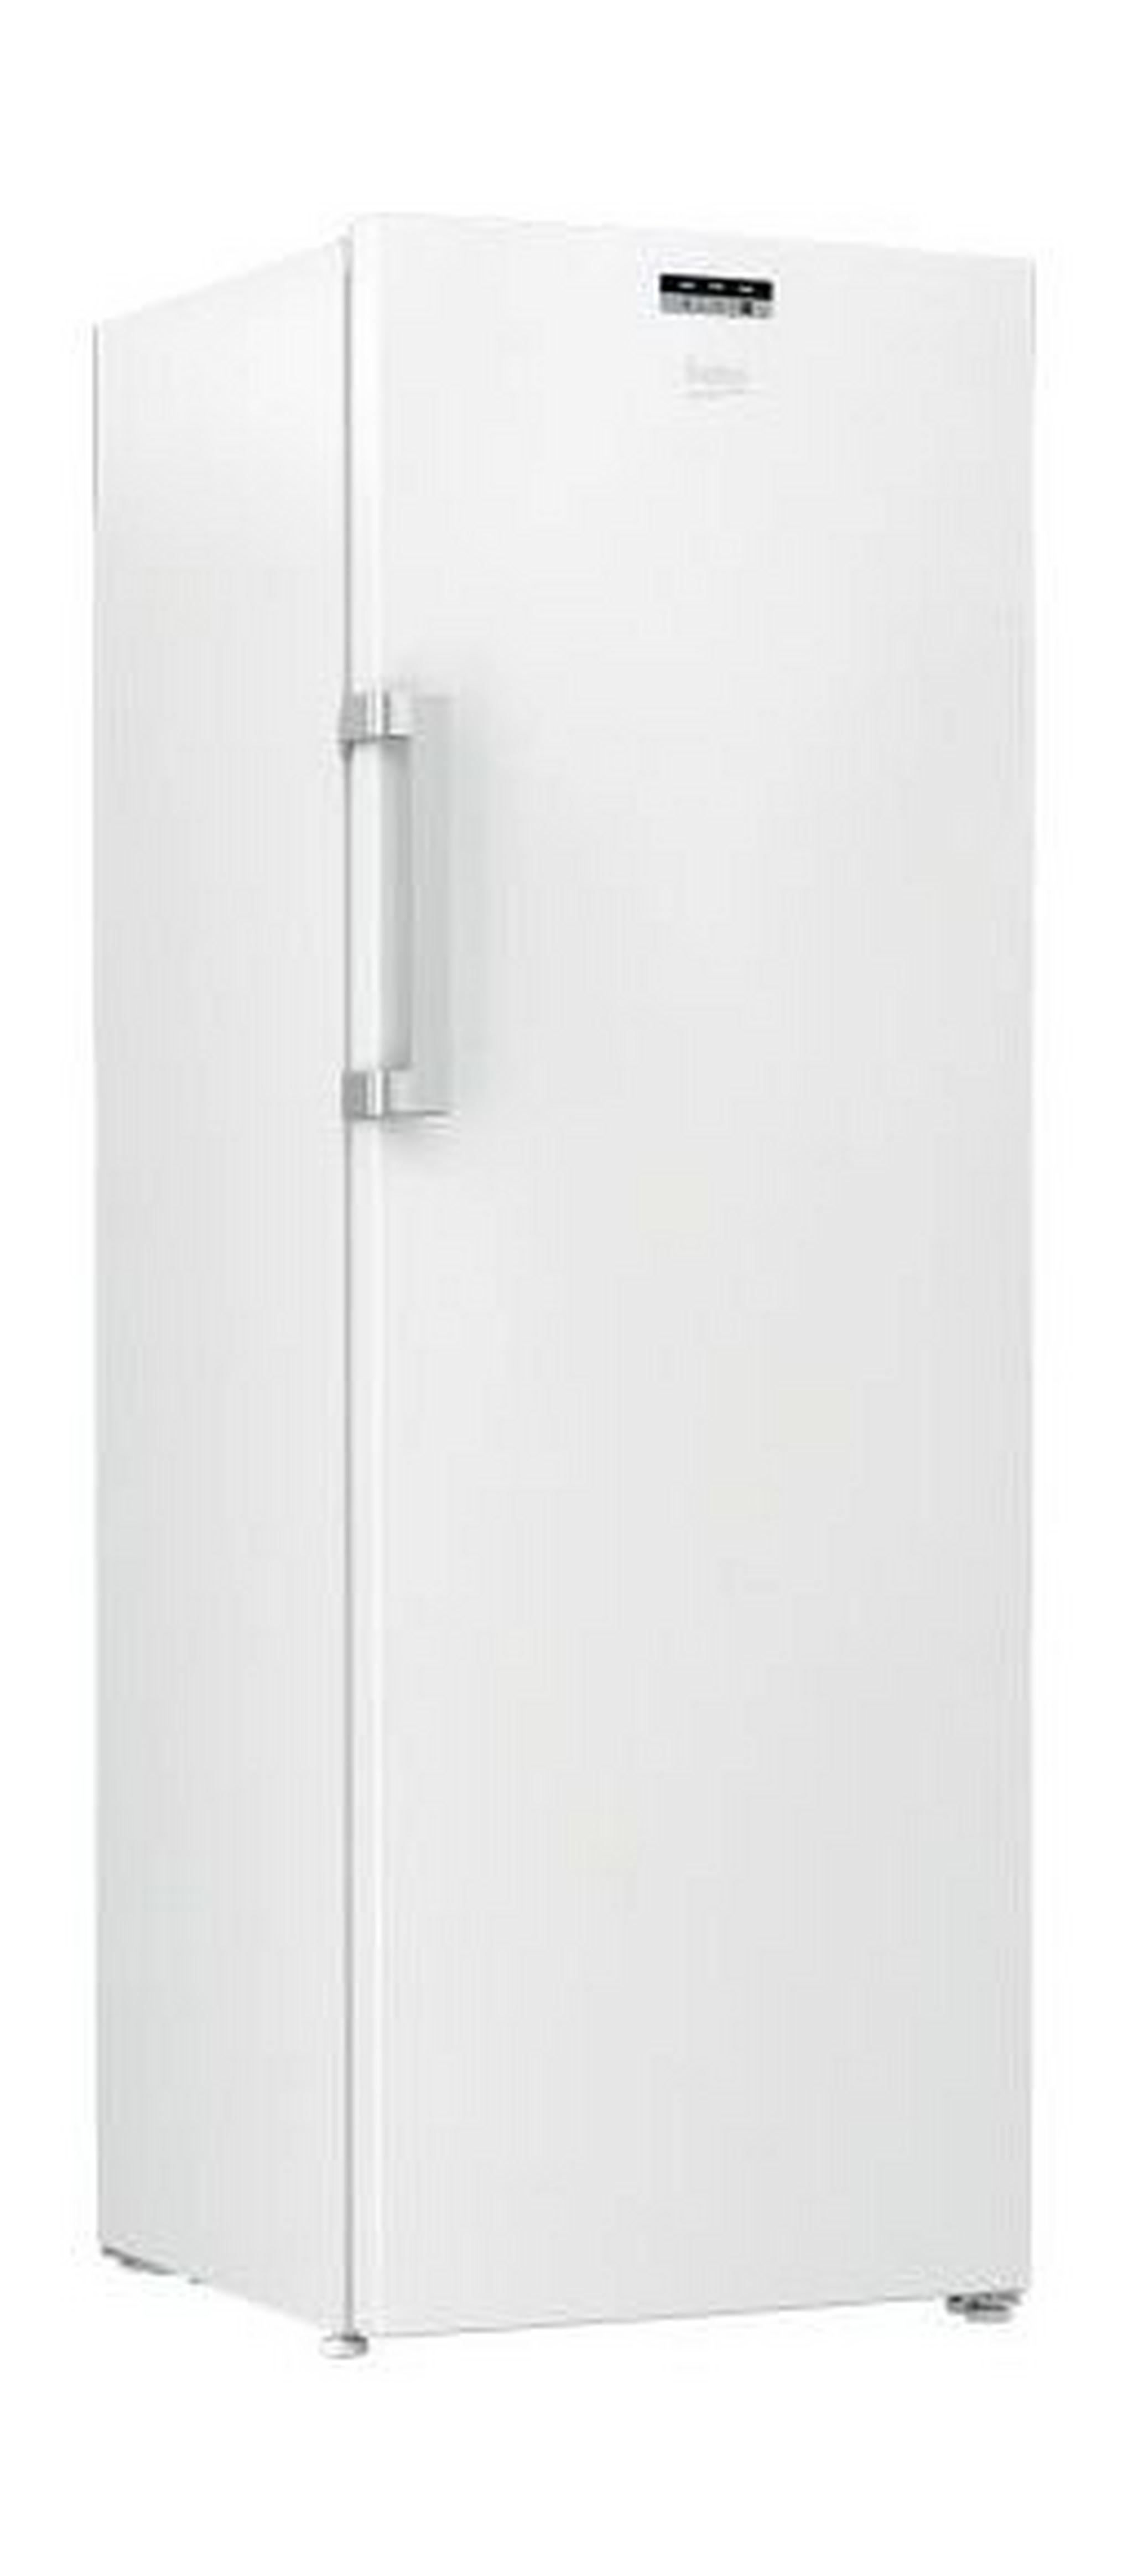 Beko Upright Freezer, 11CFT, 290-Liters, RFNE320L24W - White